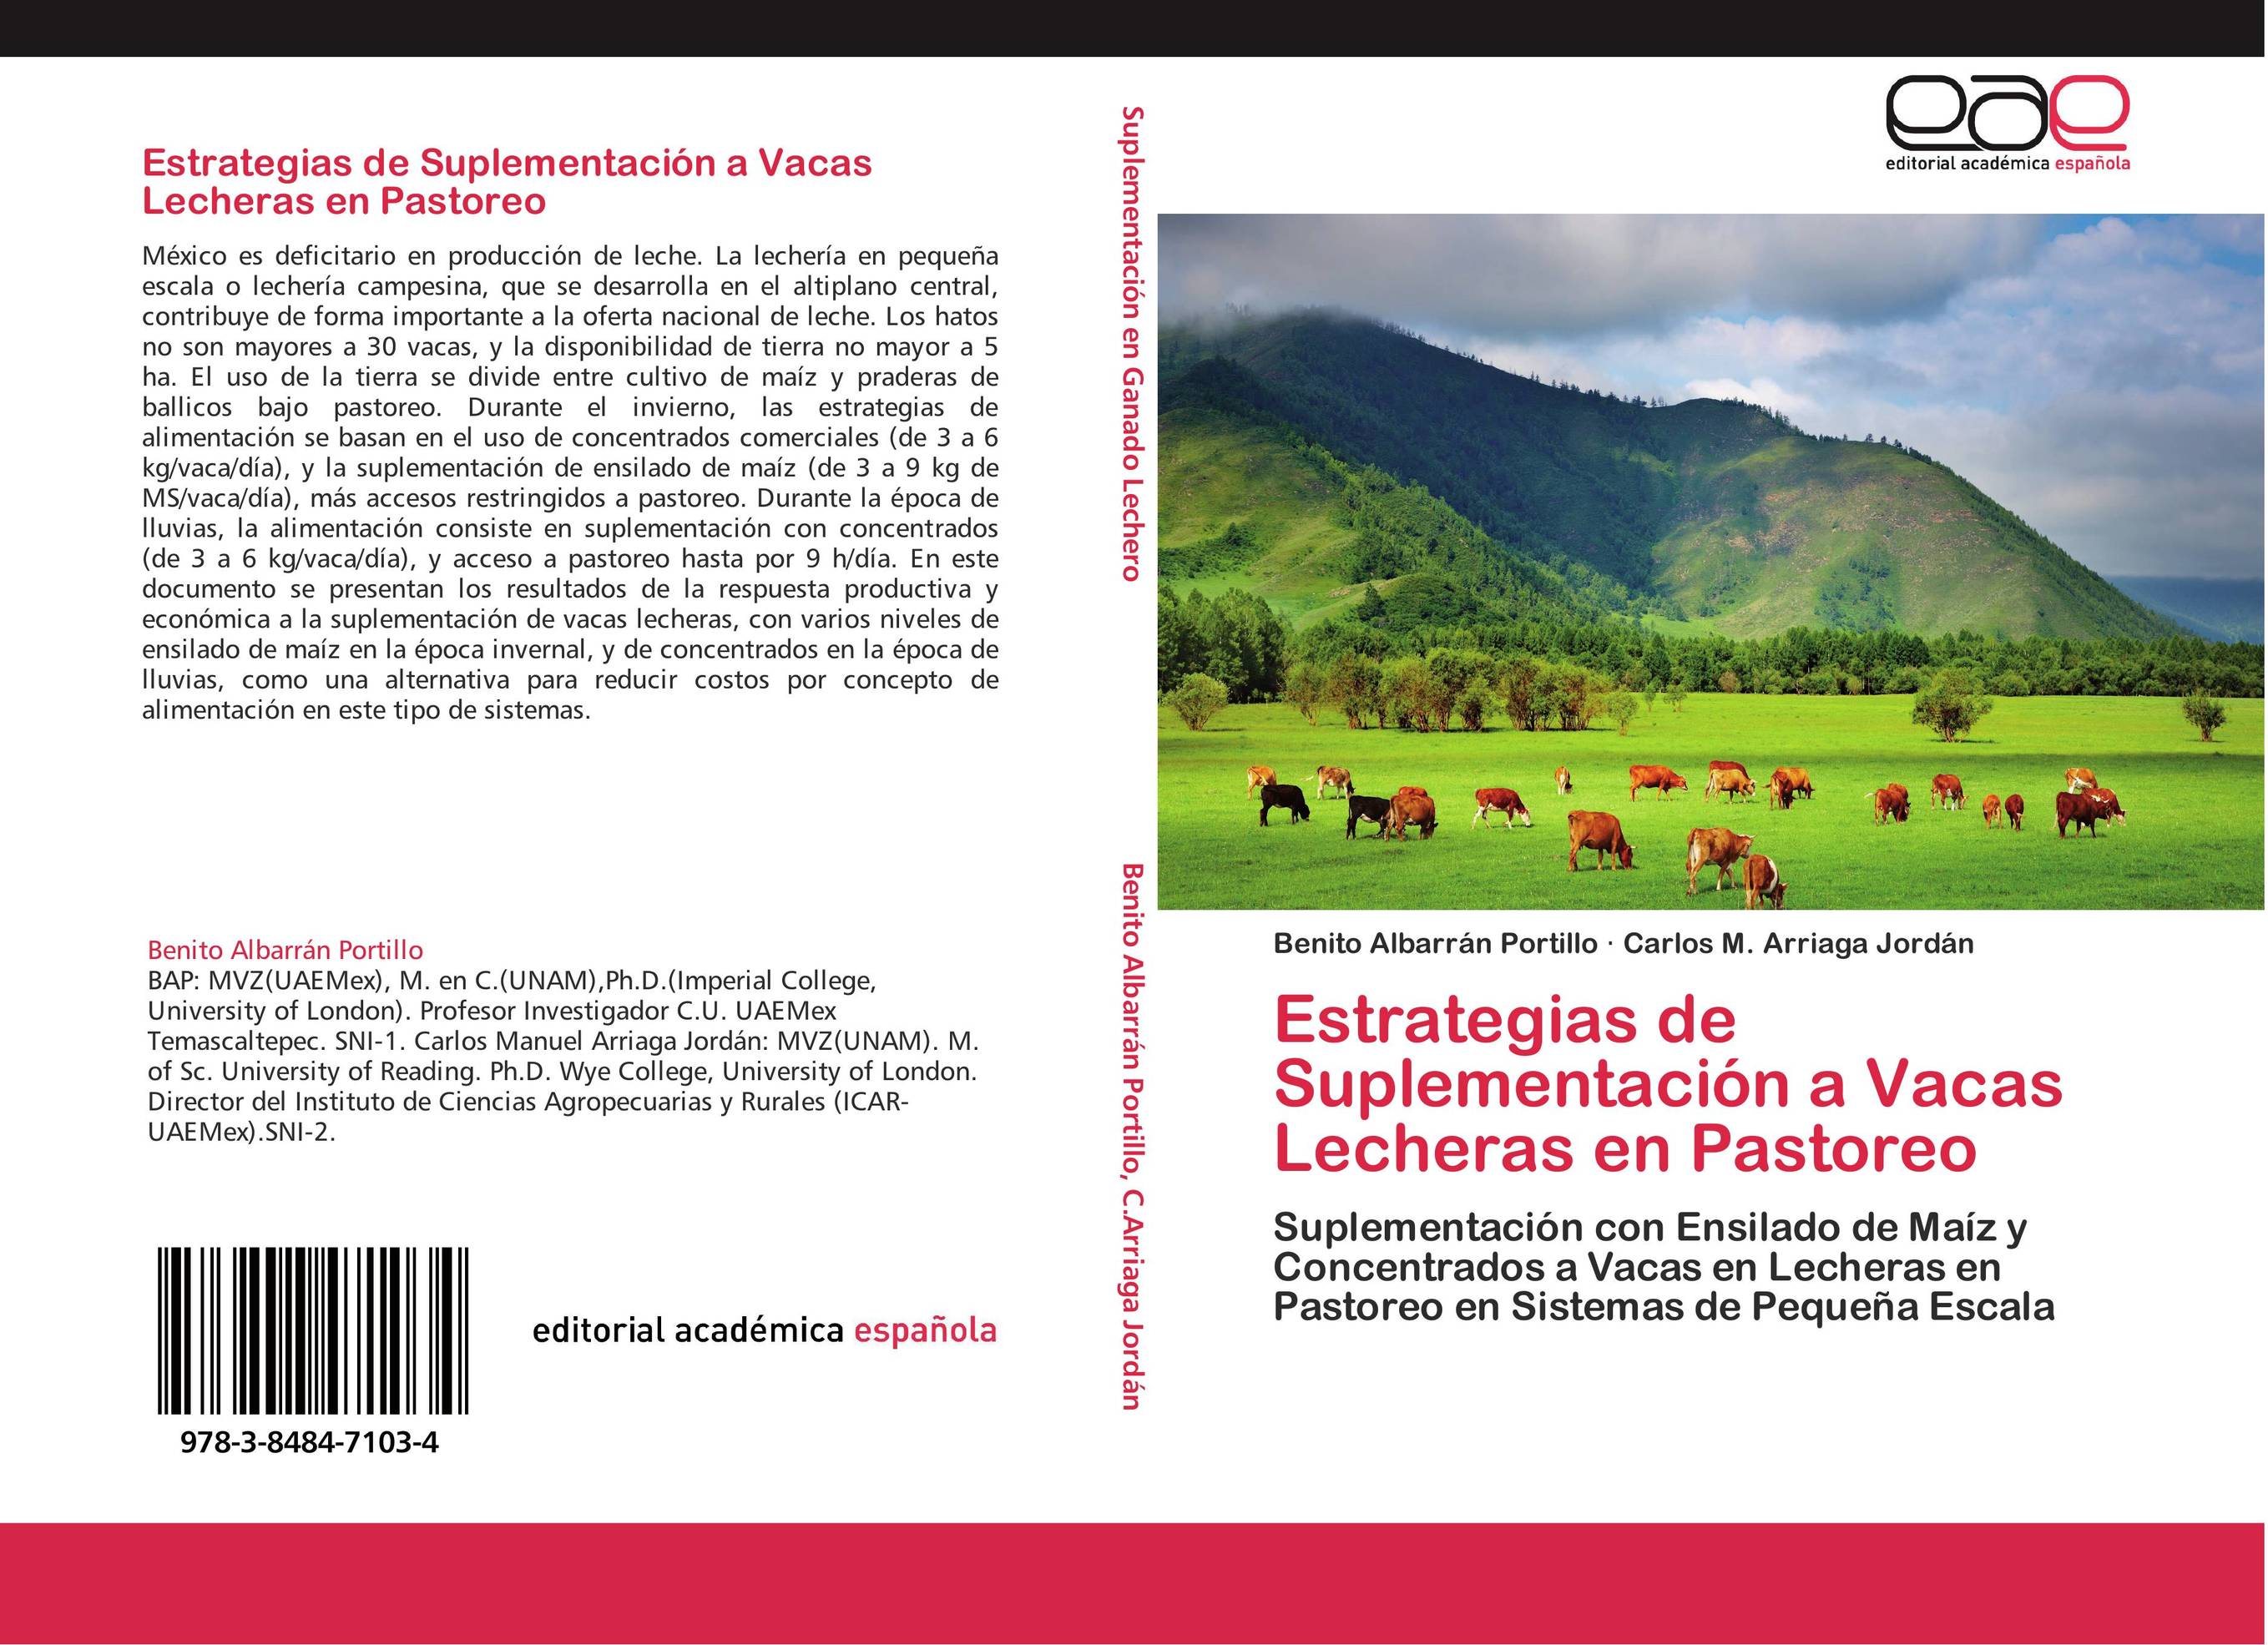 Estrategias de Suplementación a Vacas Lecheras en Pastoreo